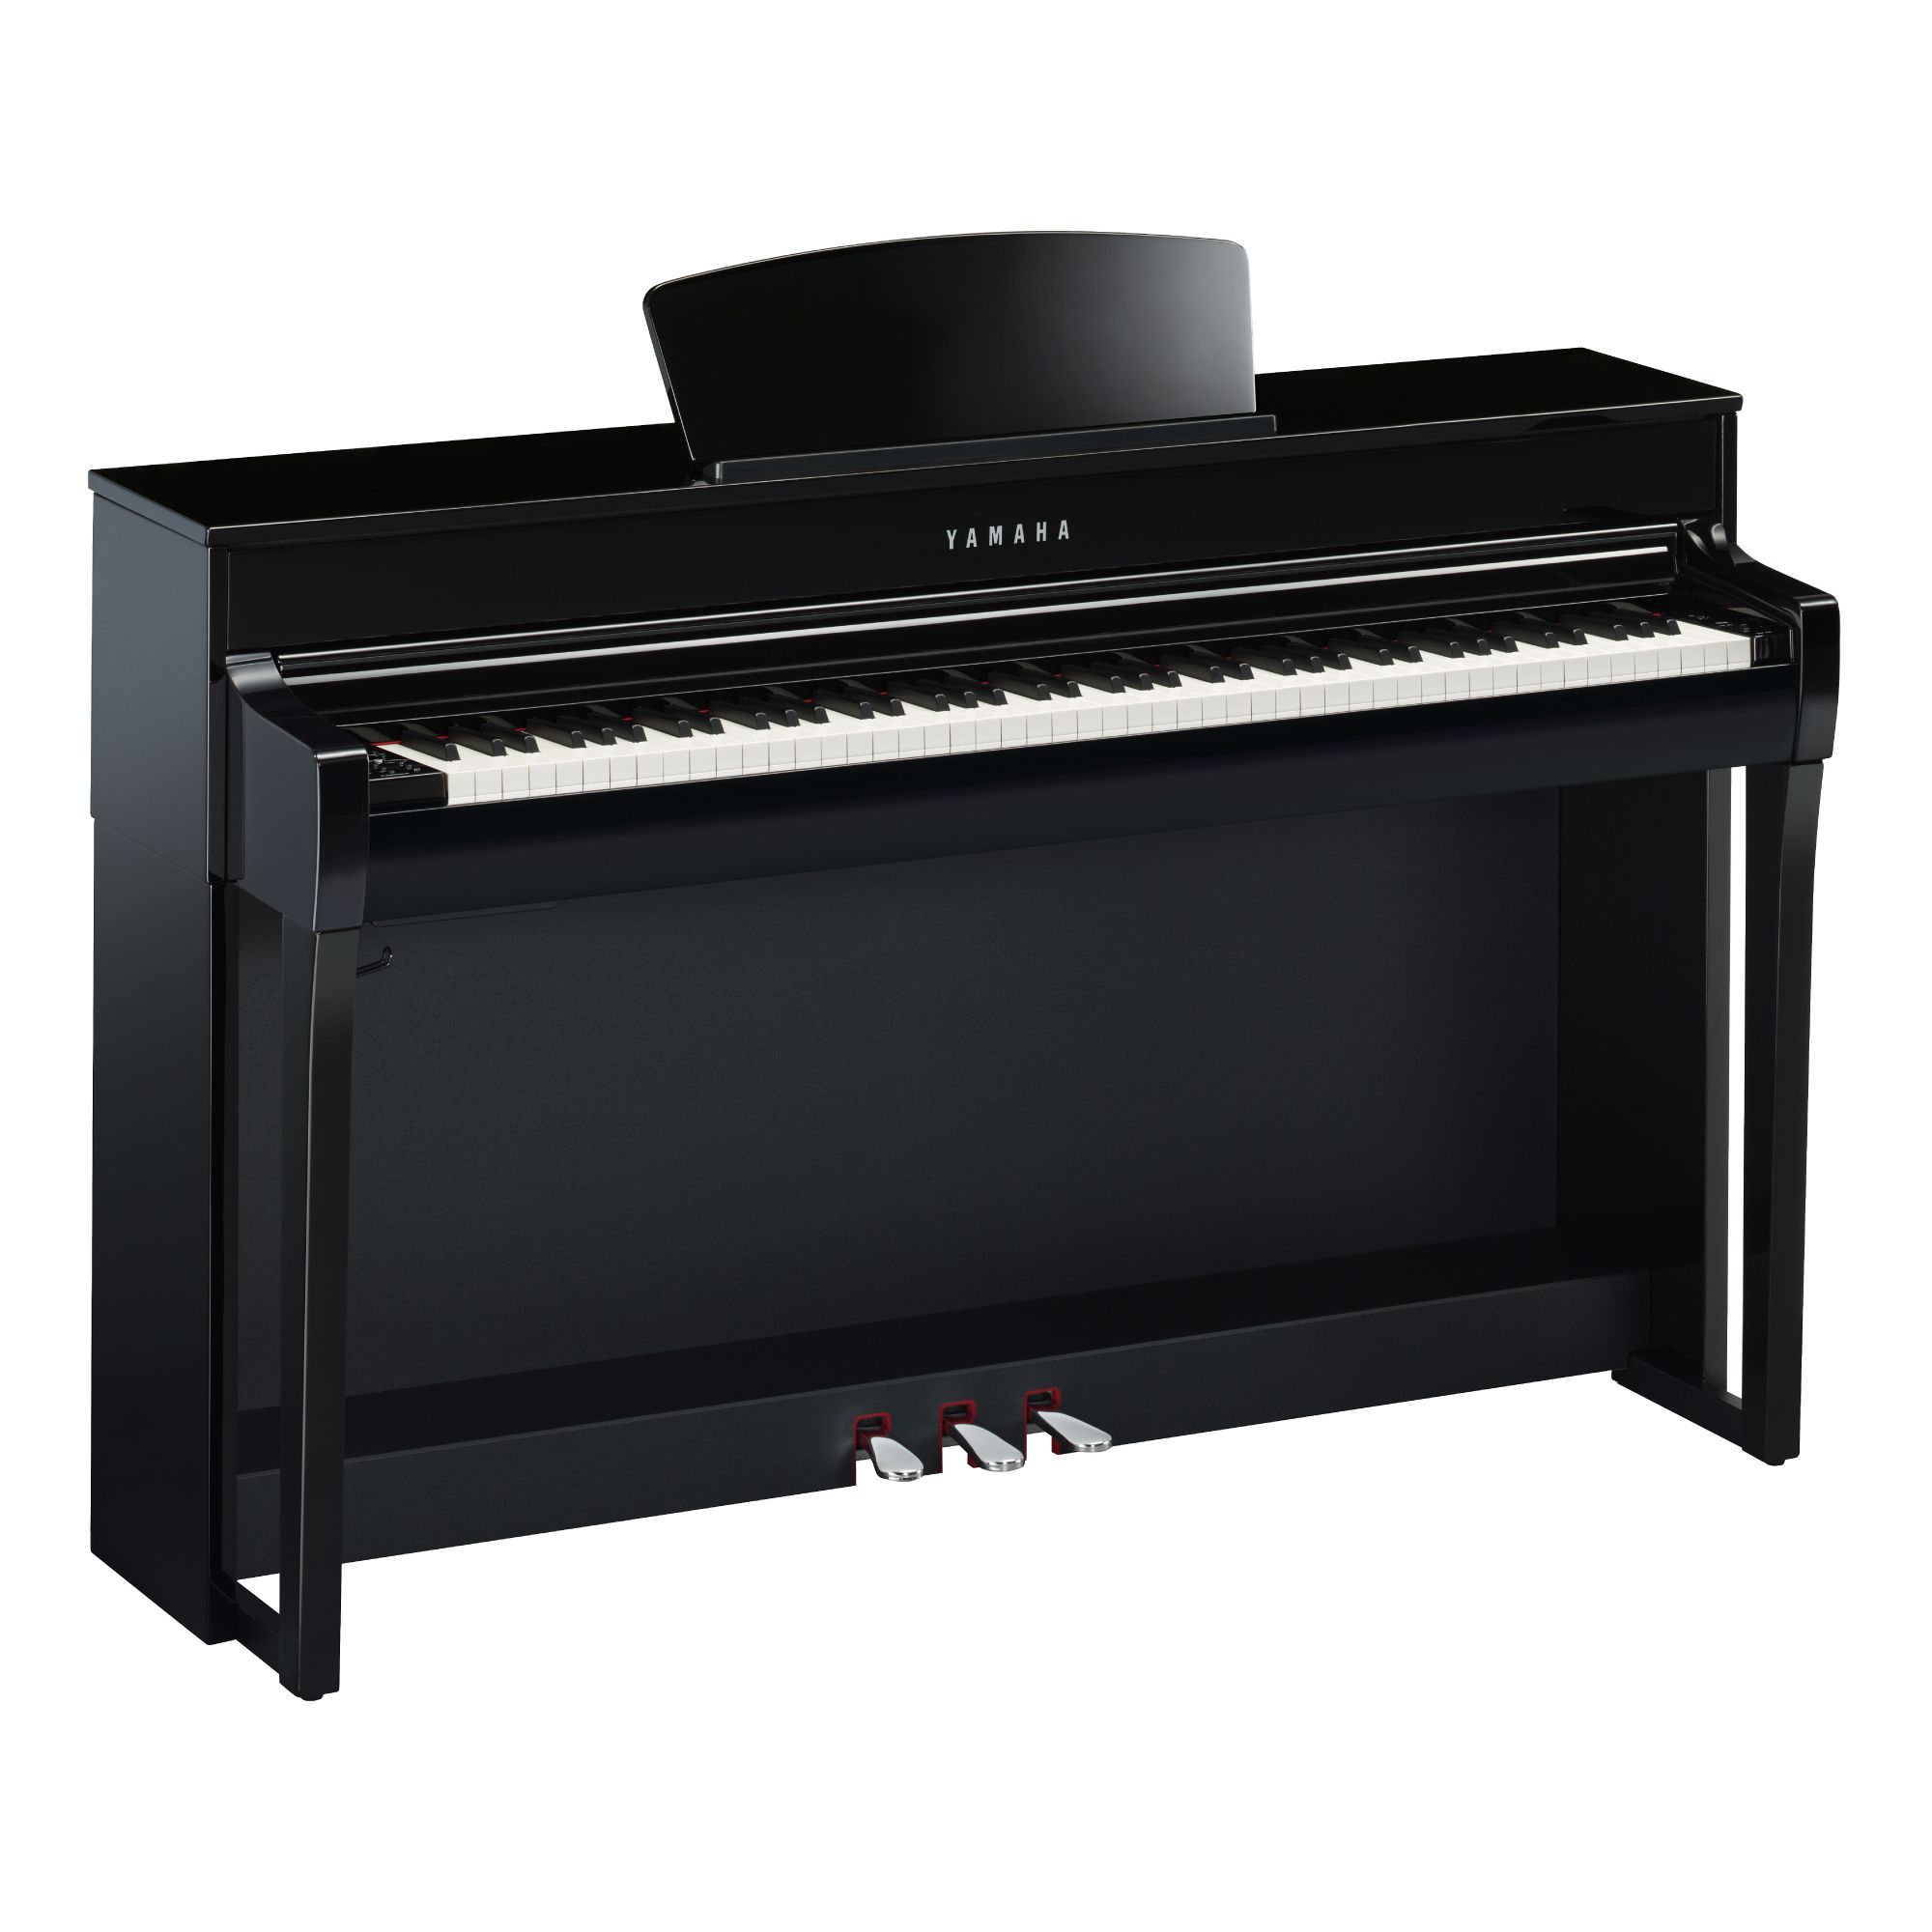 - Descripción - Clavinova - Pianos - musicales - Productos Yamaha -